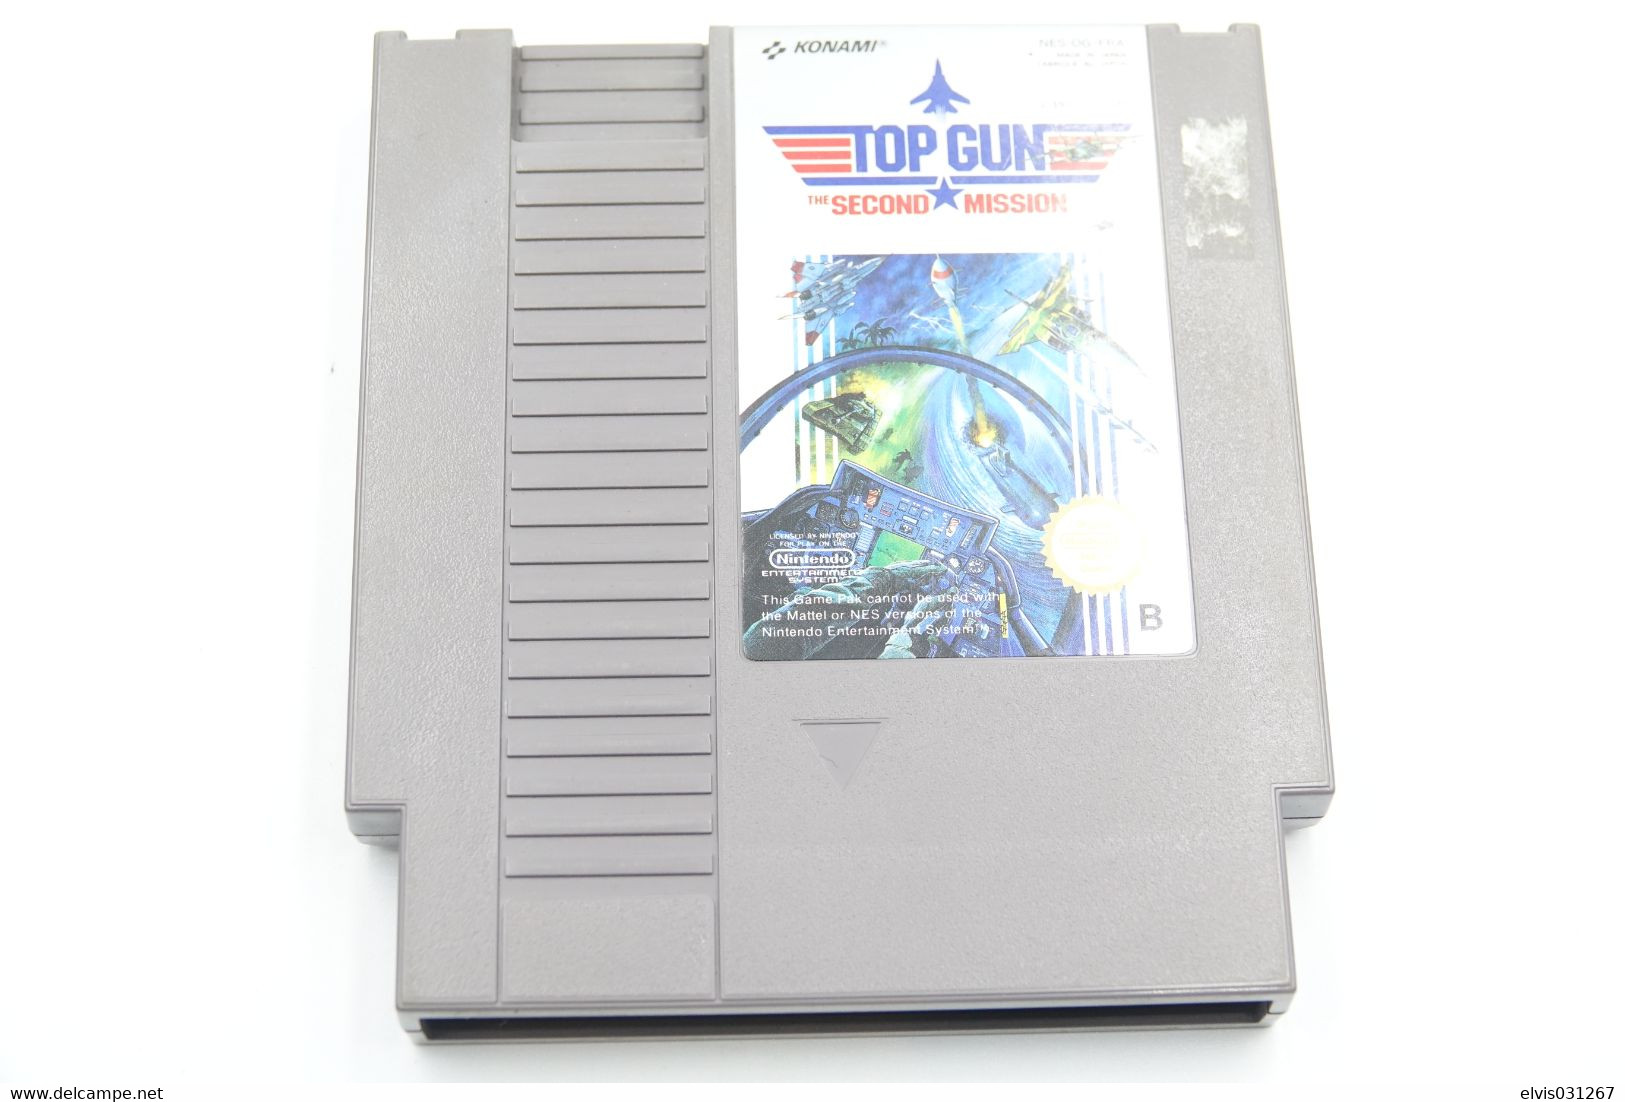 NINTENDO ENTERTAINMENT SYSTEM NES : TOP GUN THE SECOND MISSION - Nintendo (NES)